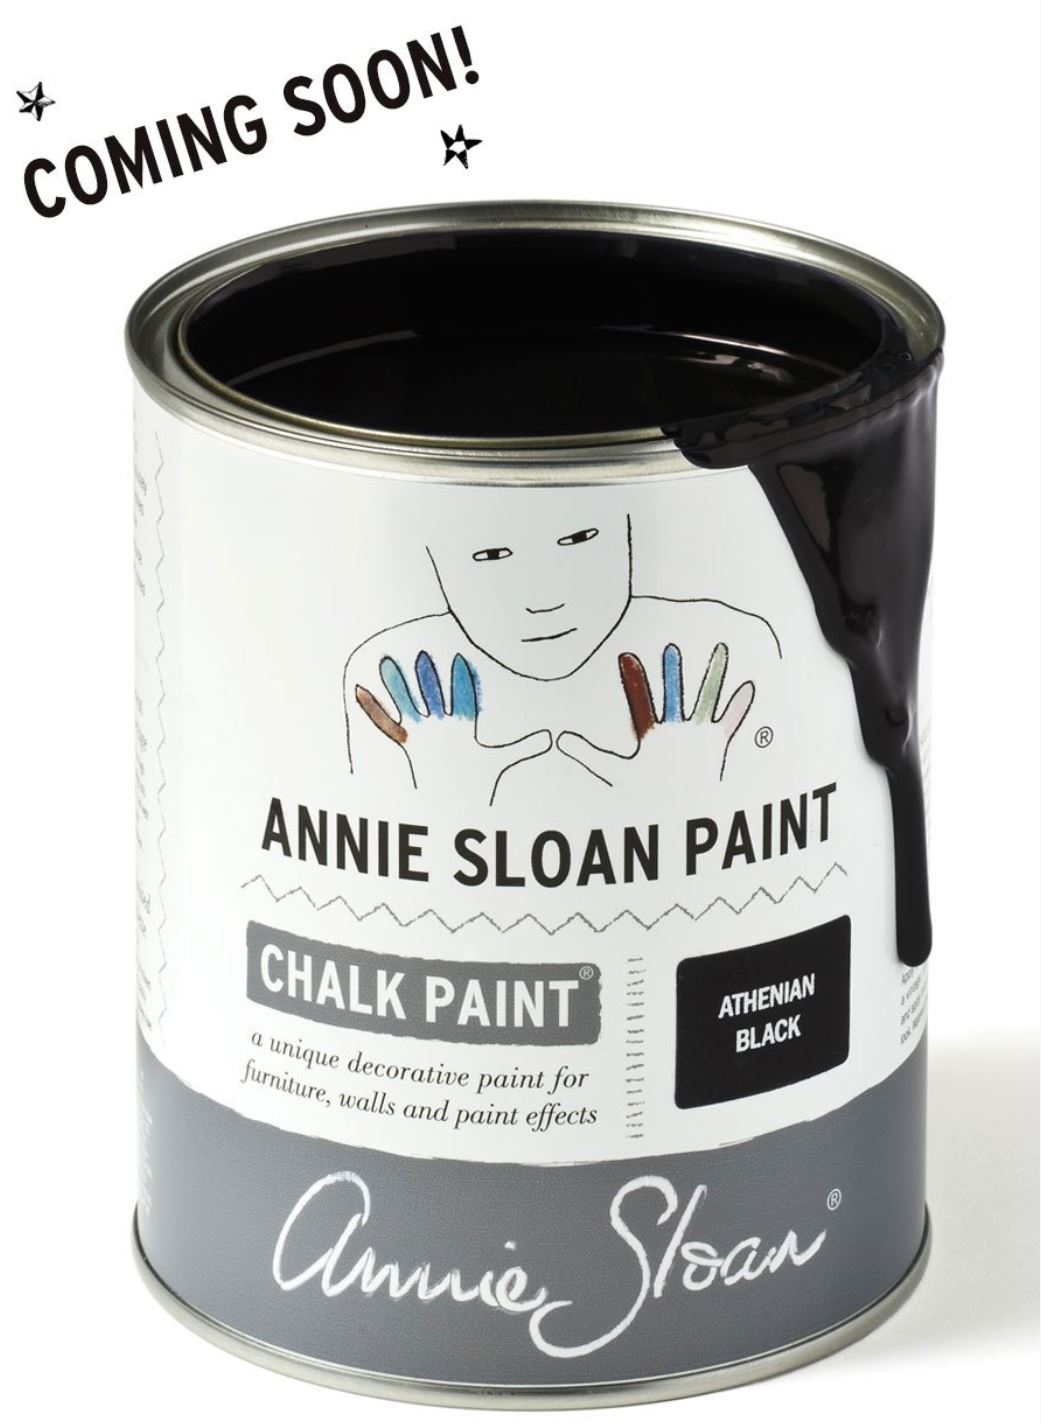 Athenian Black Chalk Paint® by Annie Sloan The Purple